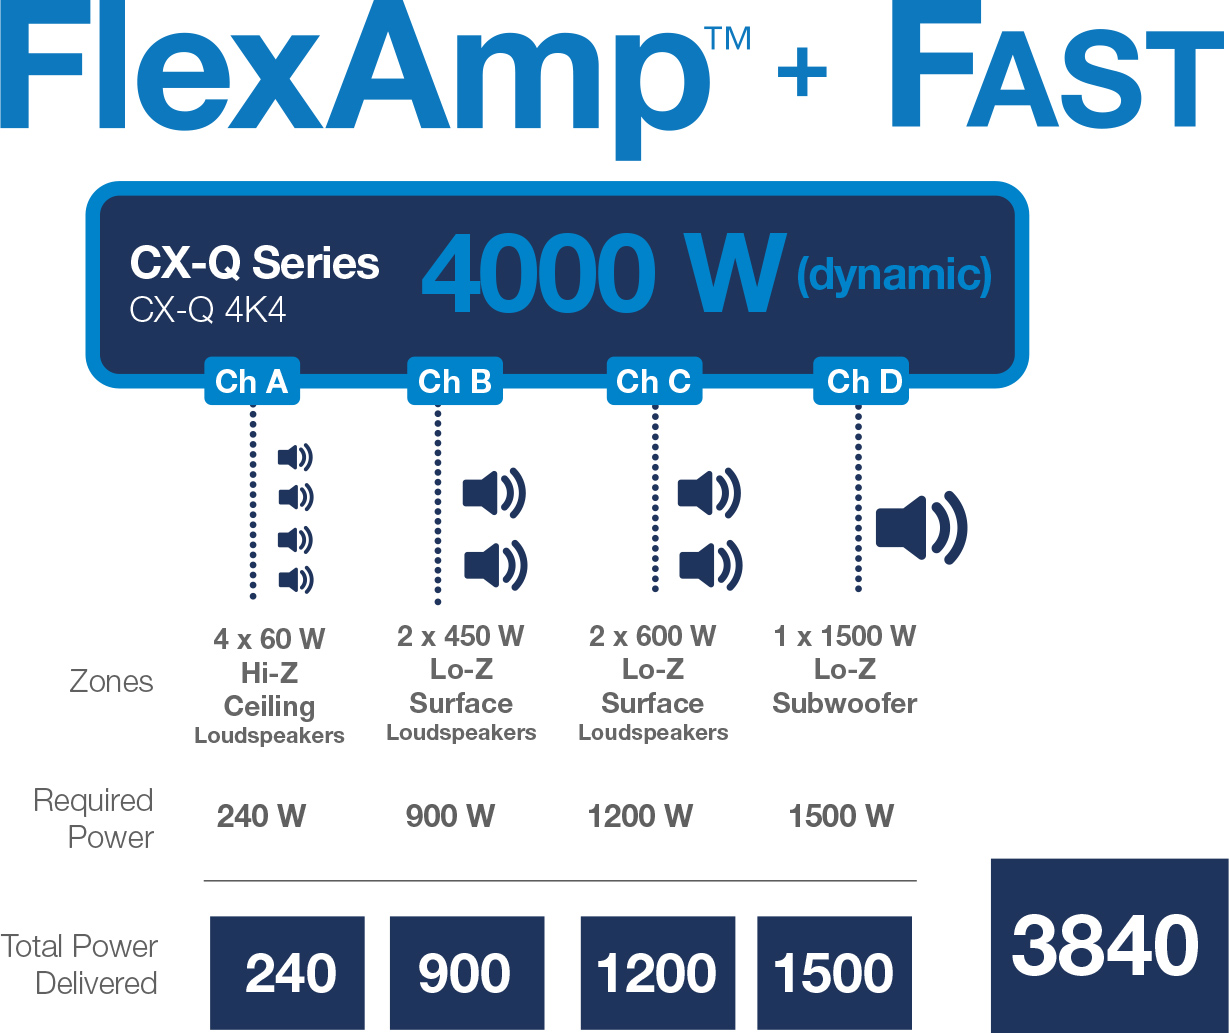 https://www.qsc.com/fileadmin/images/product/systems/CX-Q/cxq_flexamp_diagram.jpg